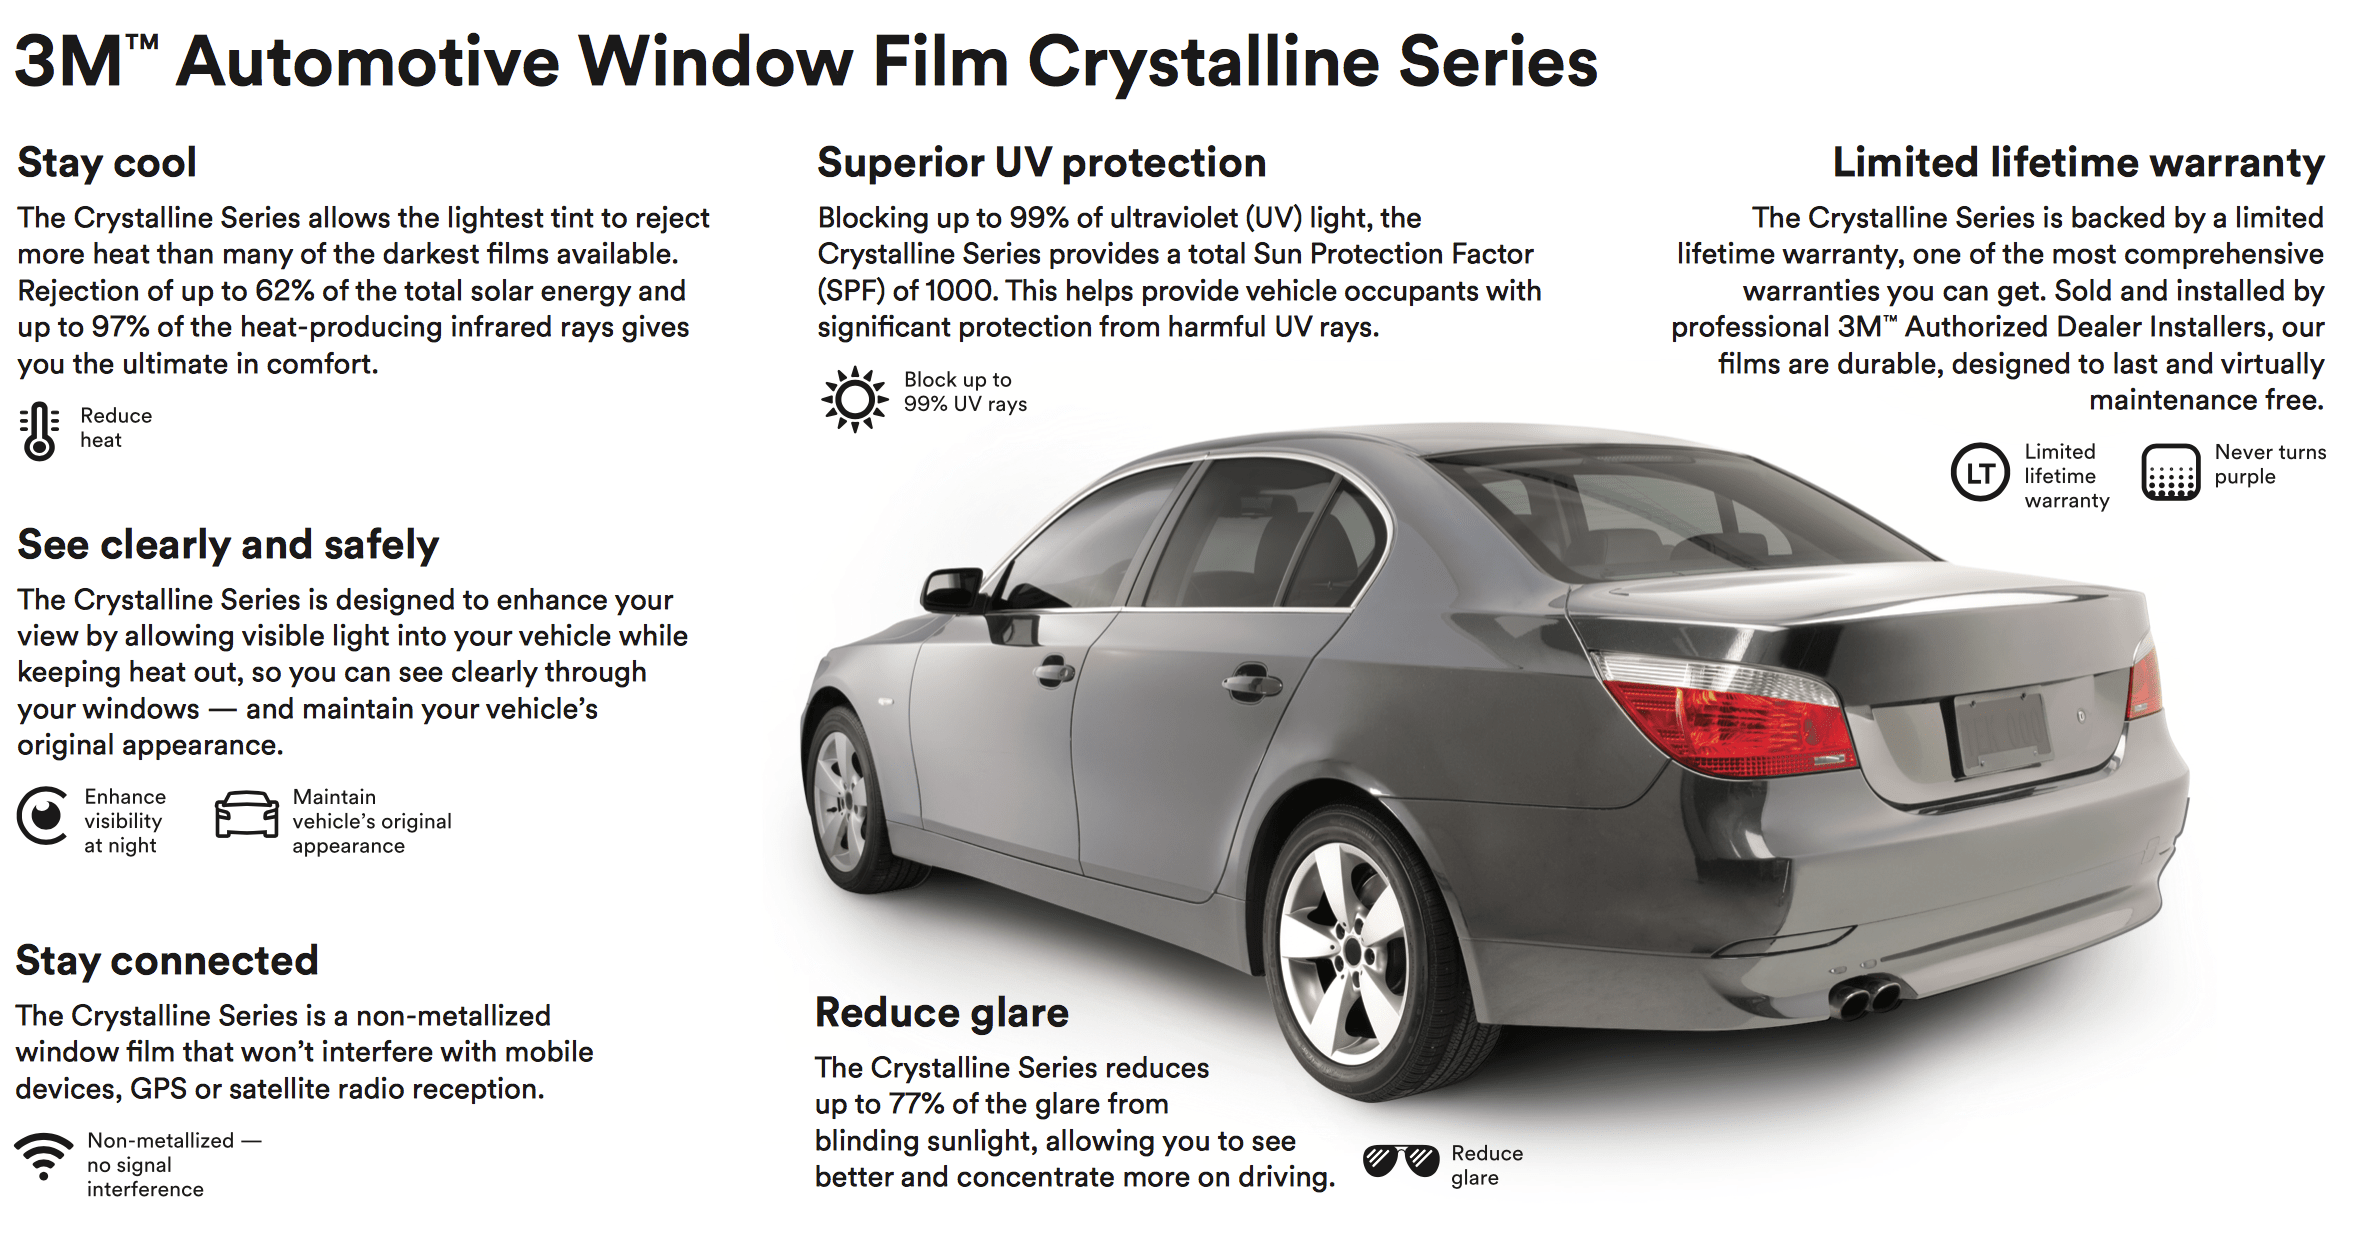 3M Automotive Window Film Crystalline Series Infographic